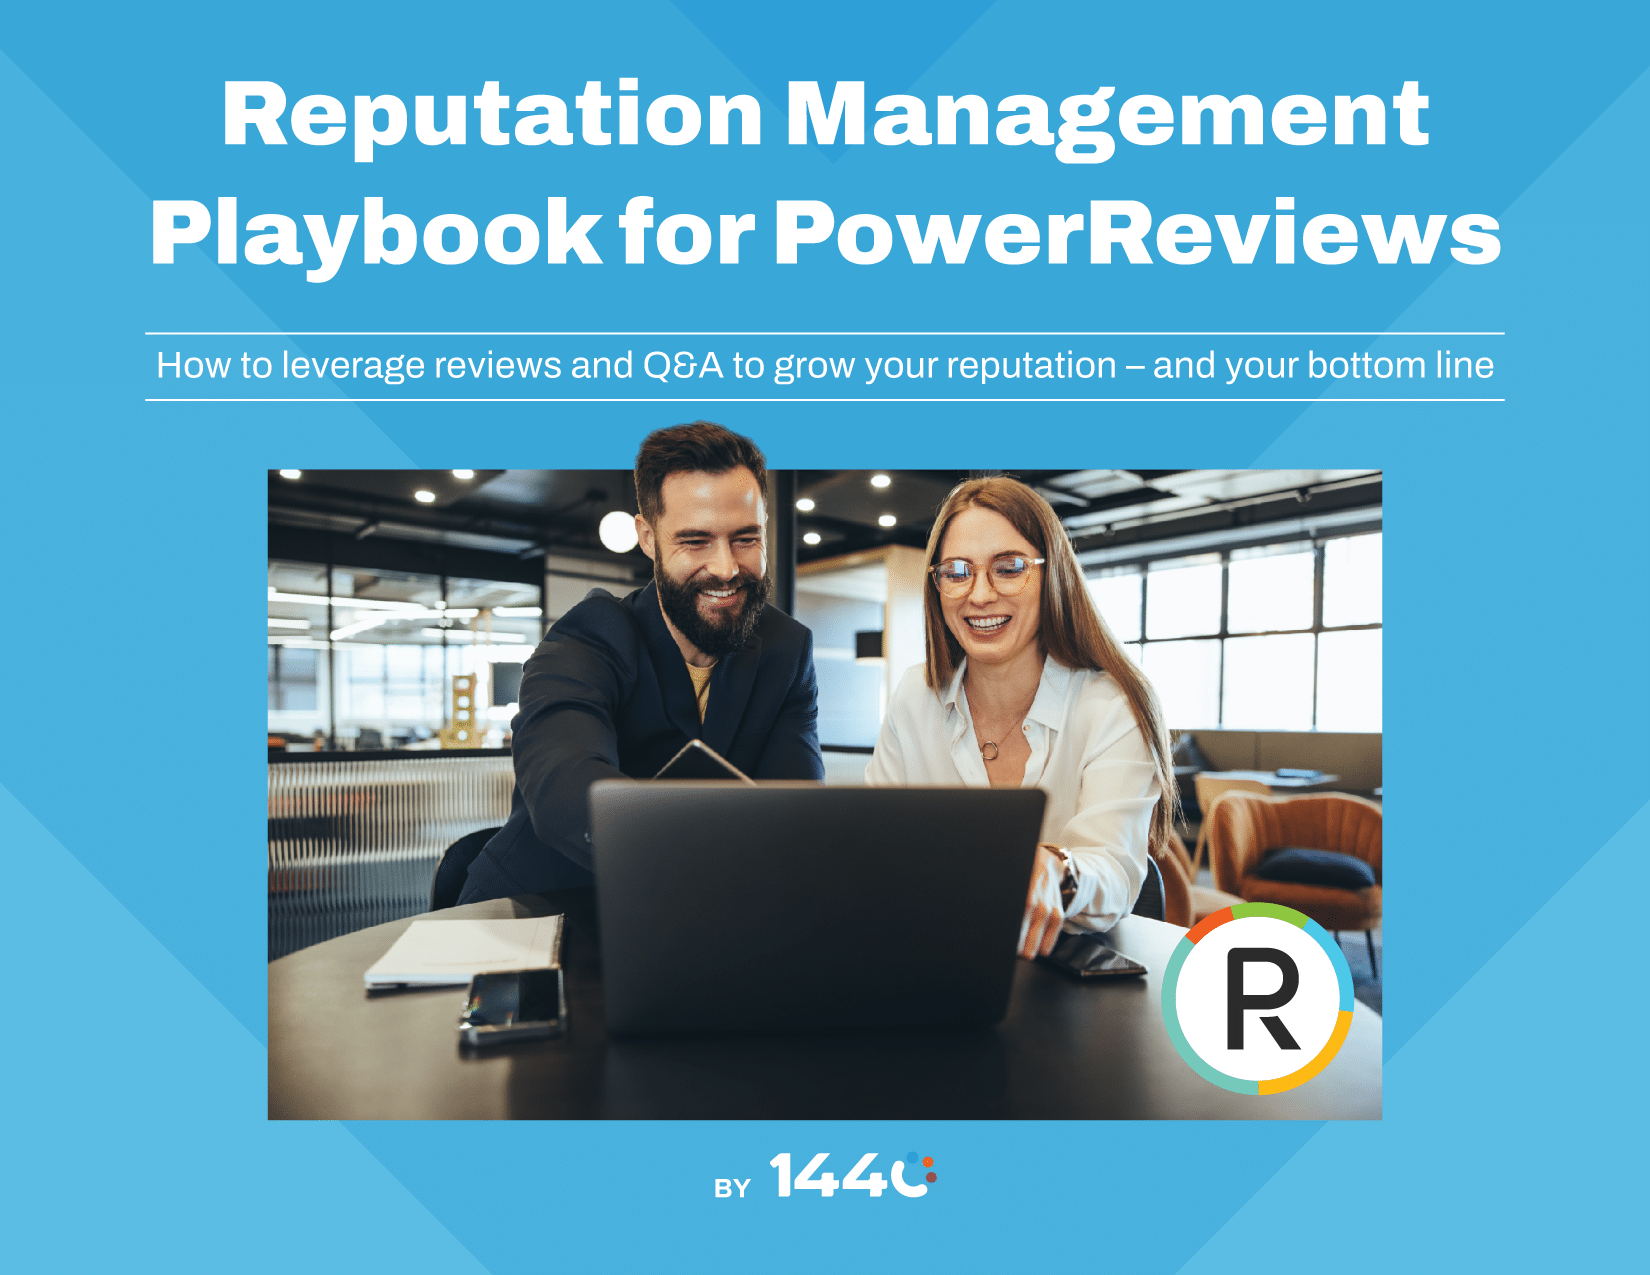 PowerReviews Reputation Management Playbook